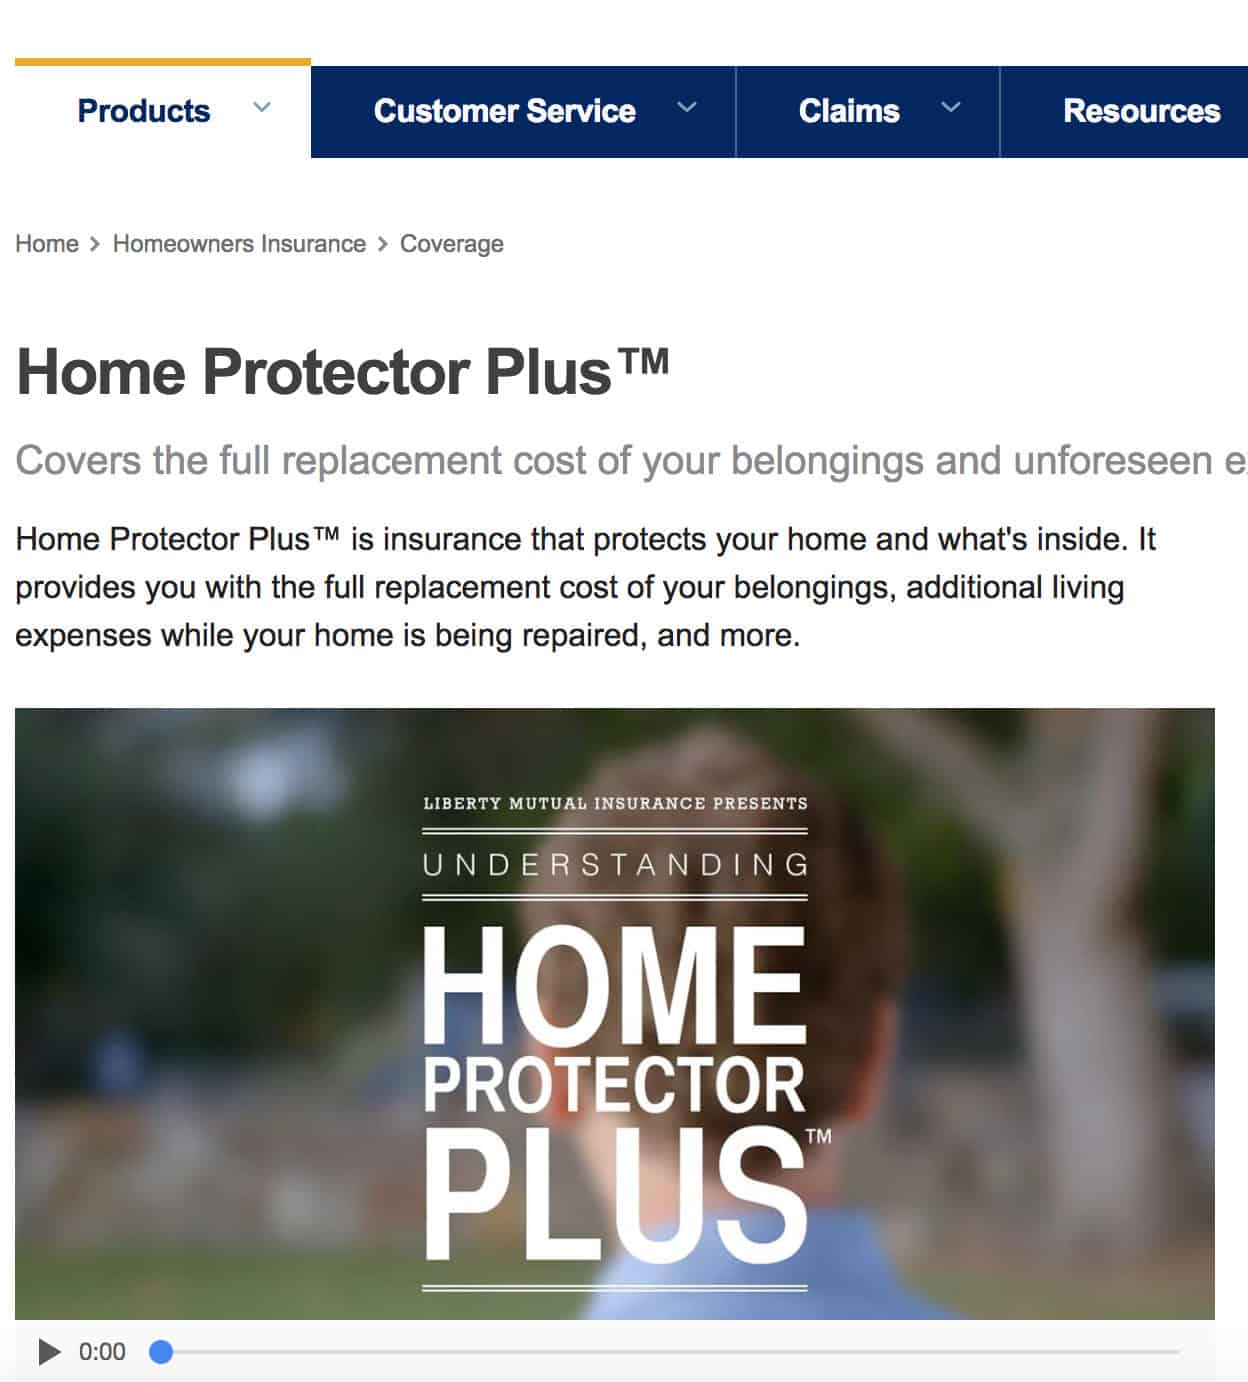 Liberty Mutual Home Protector Plus